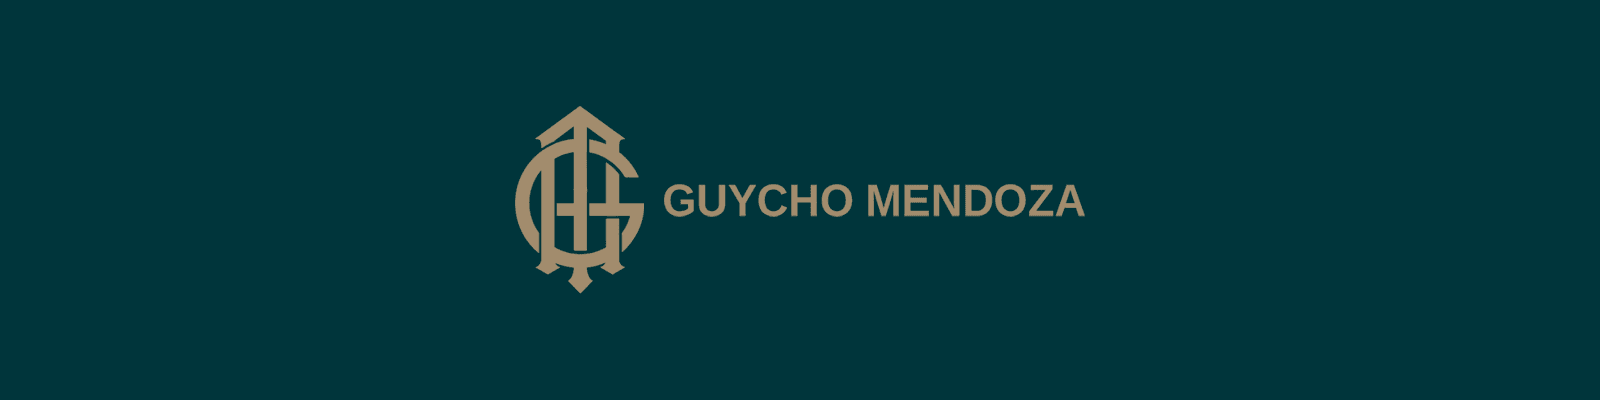 GuychoMendoza banner